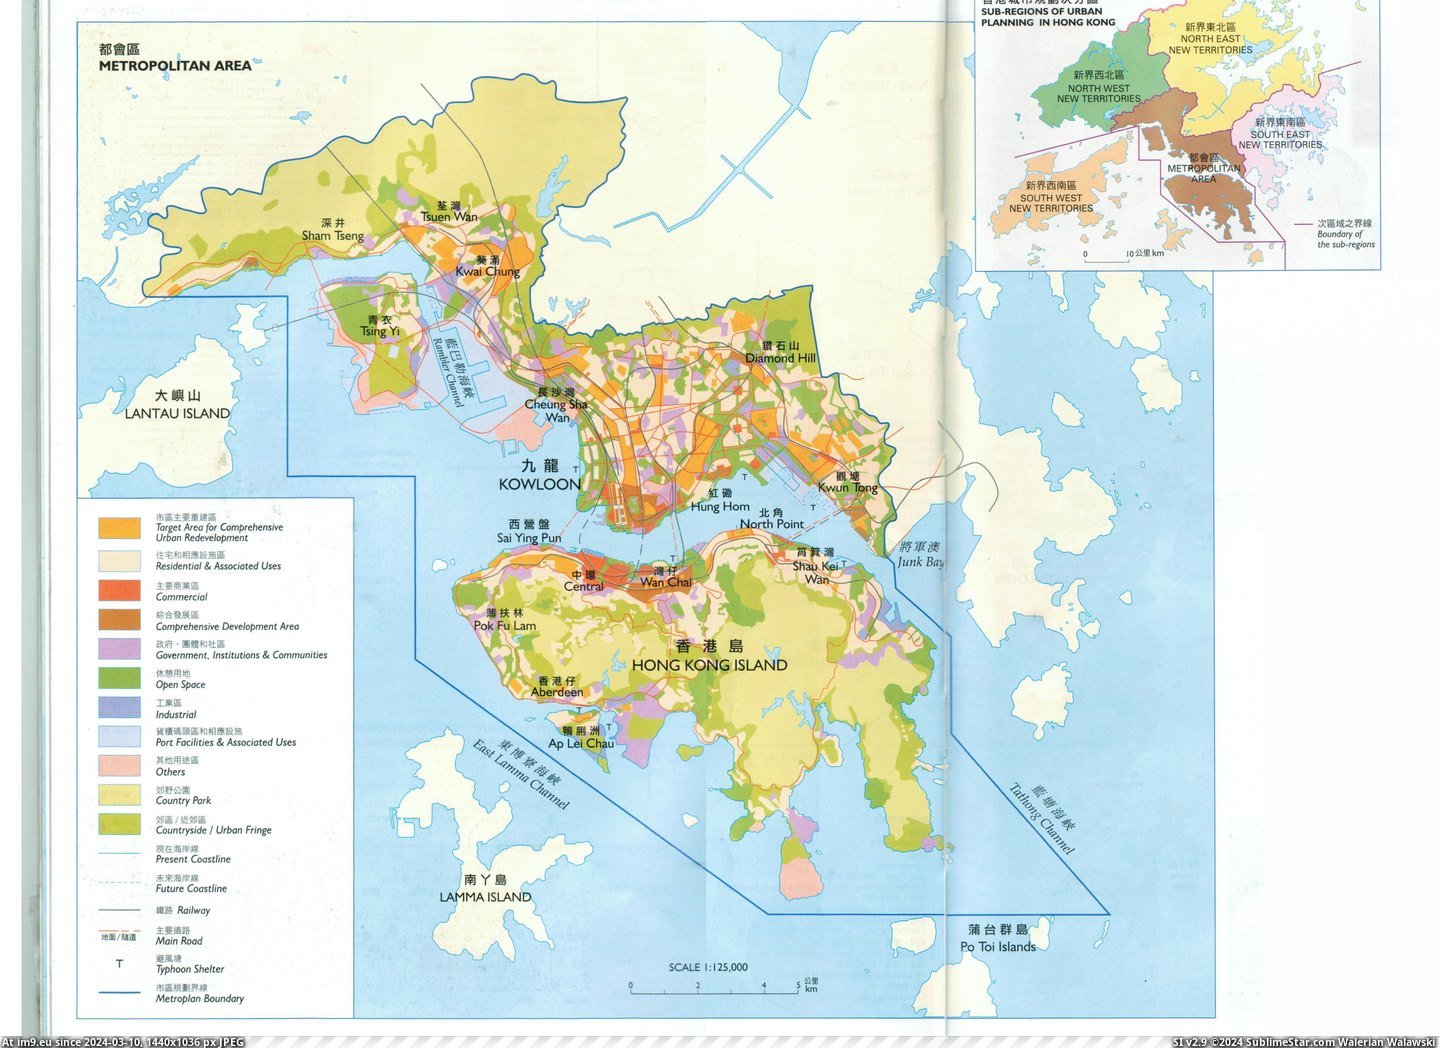 #Metropolitan #Area #Kong #Land #Hong [Mapporn] Land Use of the Metropolitan Area of Hong Kong [4076x2945] Pic. (Obraz z album My r/MAPS favs))